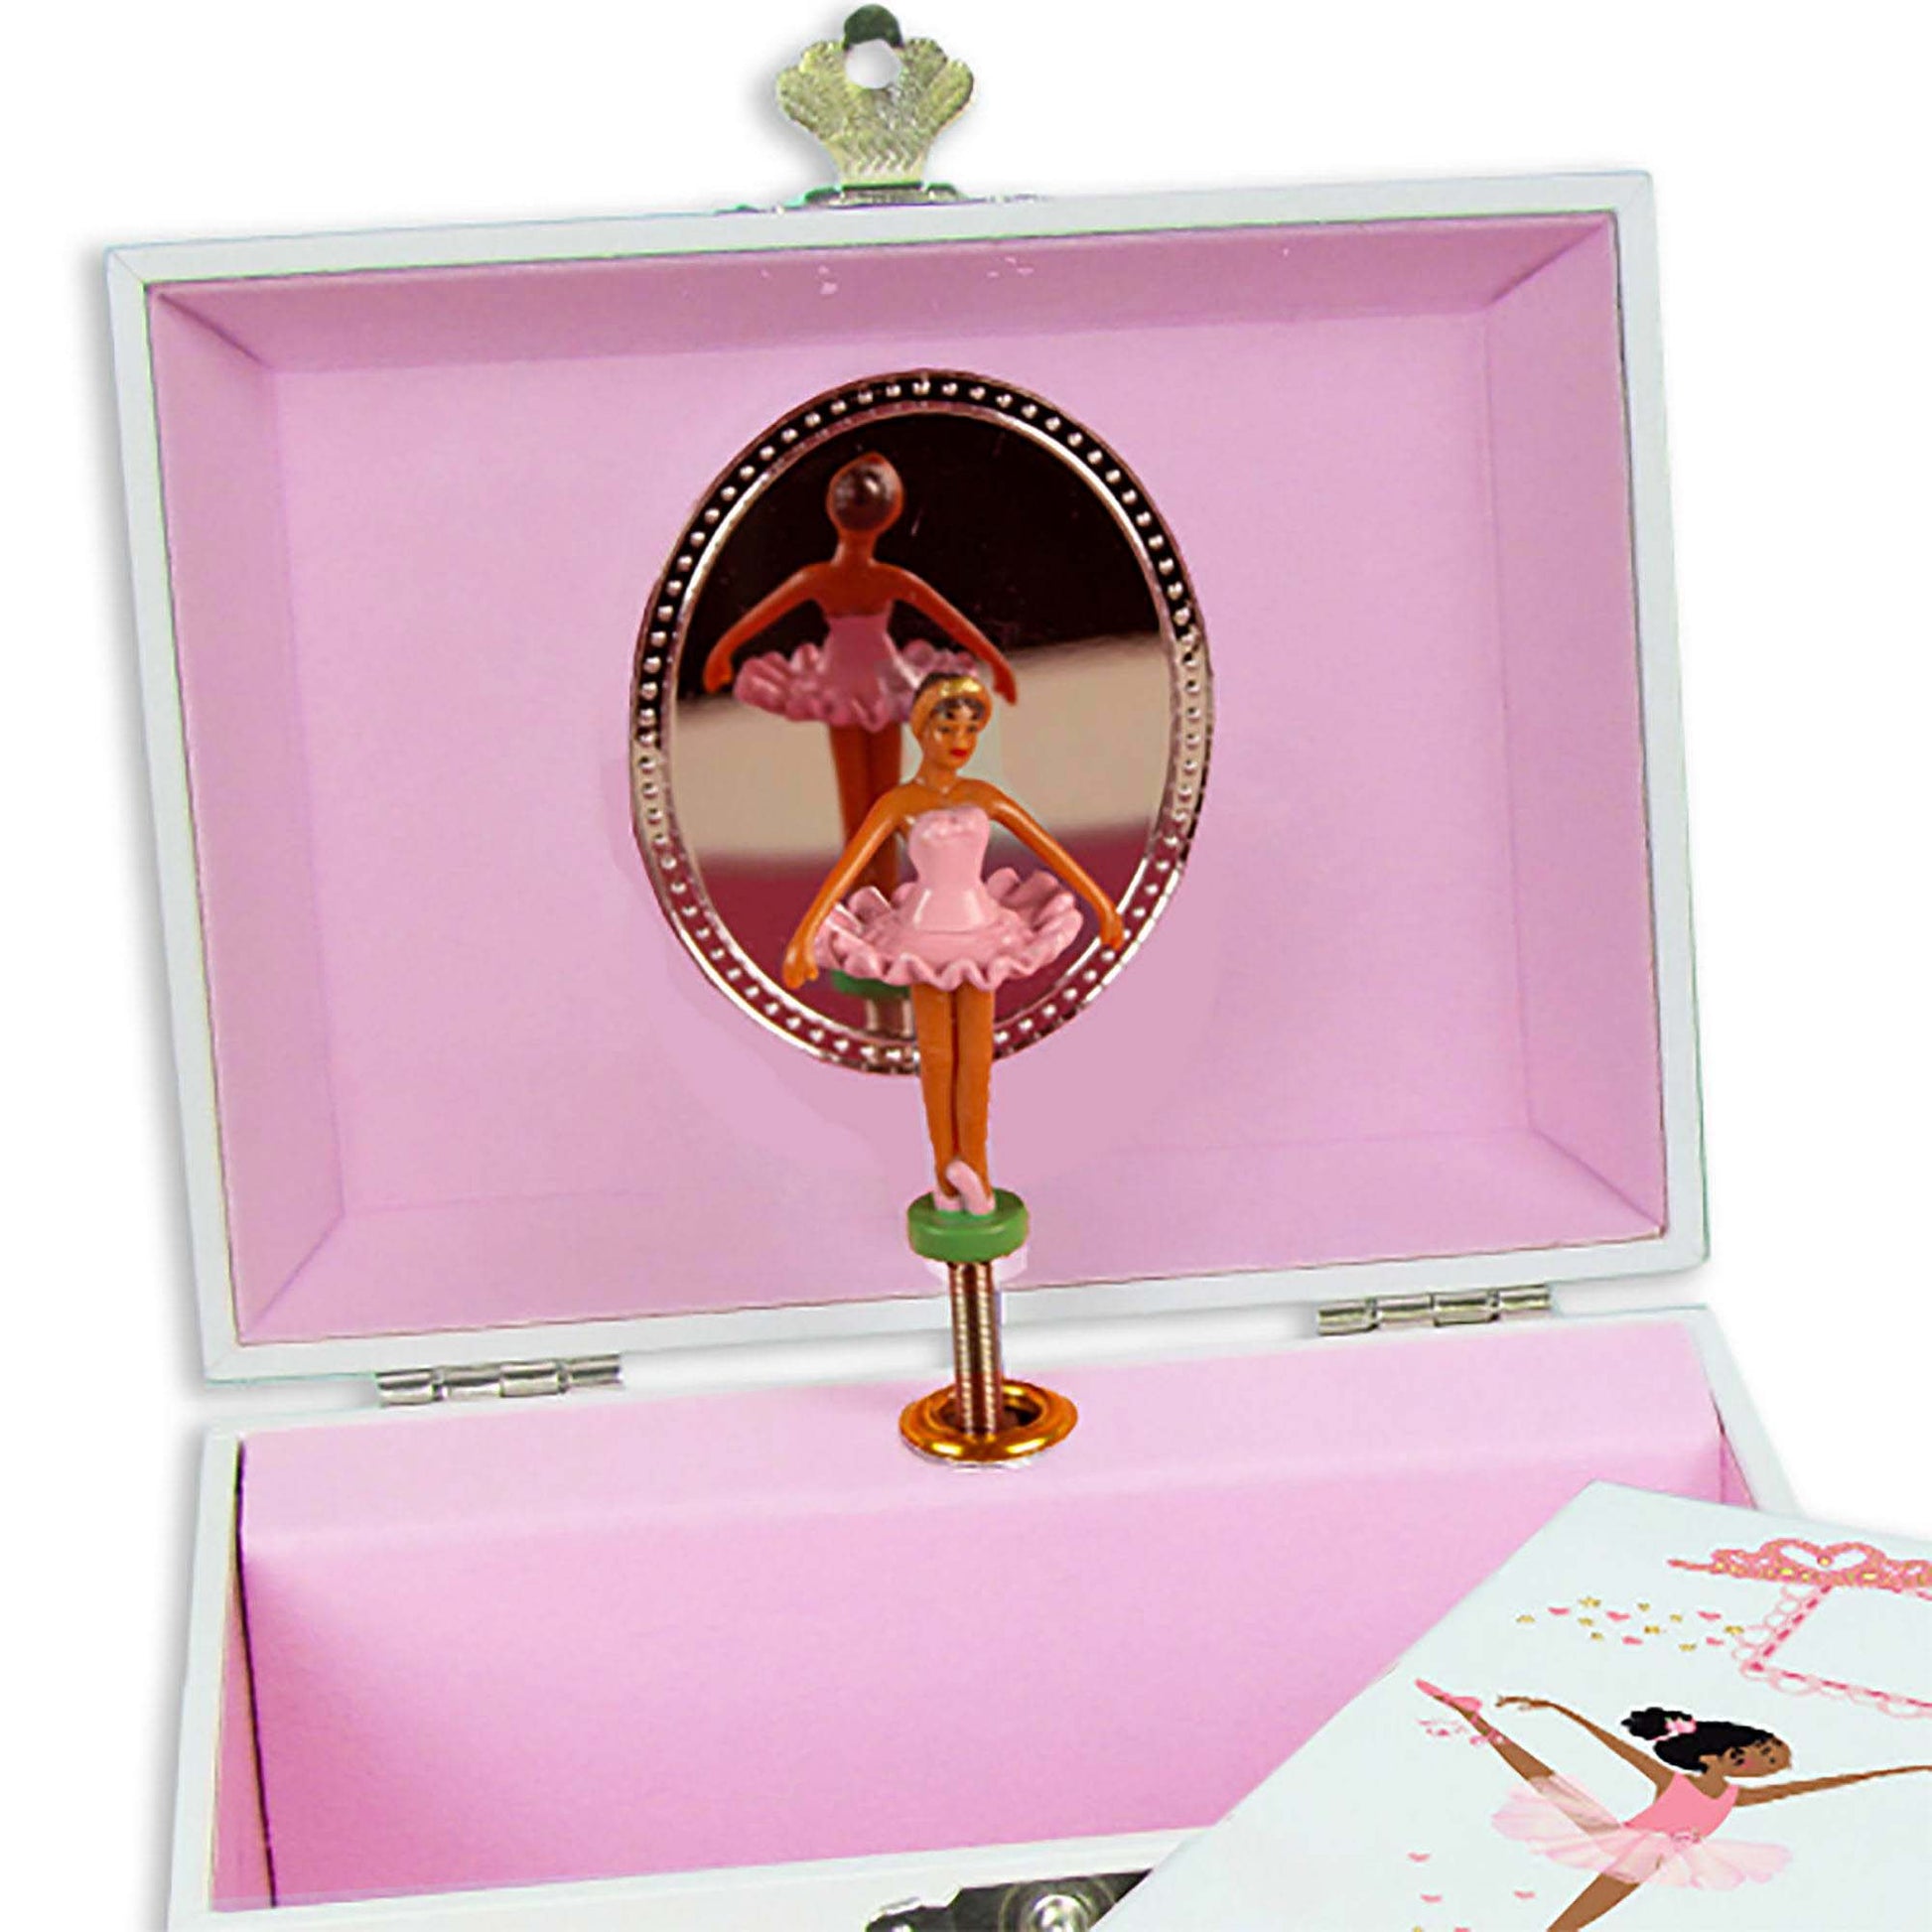 Personalized Ballerina Jewelry Box with English Garden design